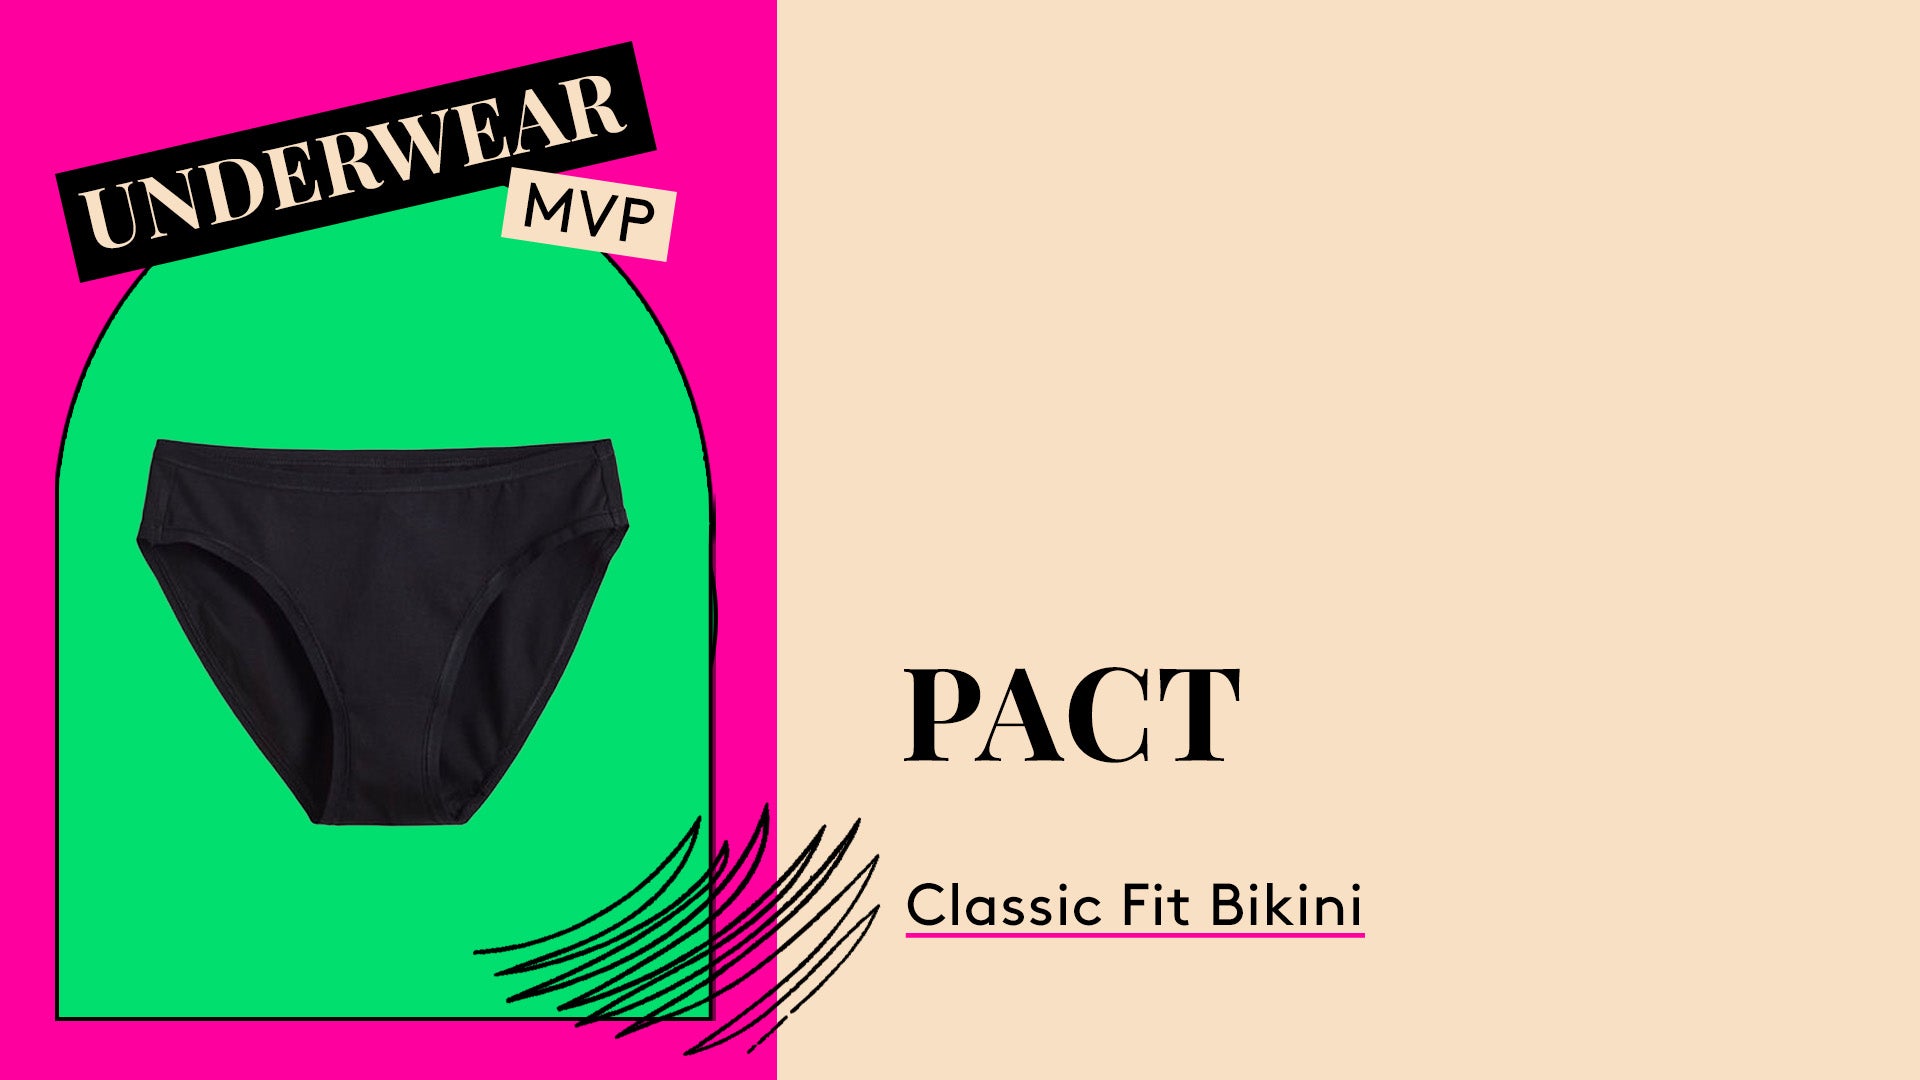 Underwear MVP. Pact Classic Fit Bikini.